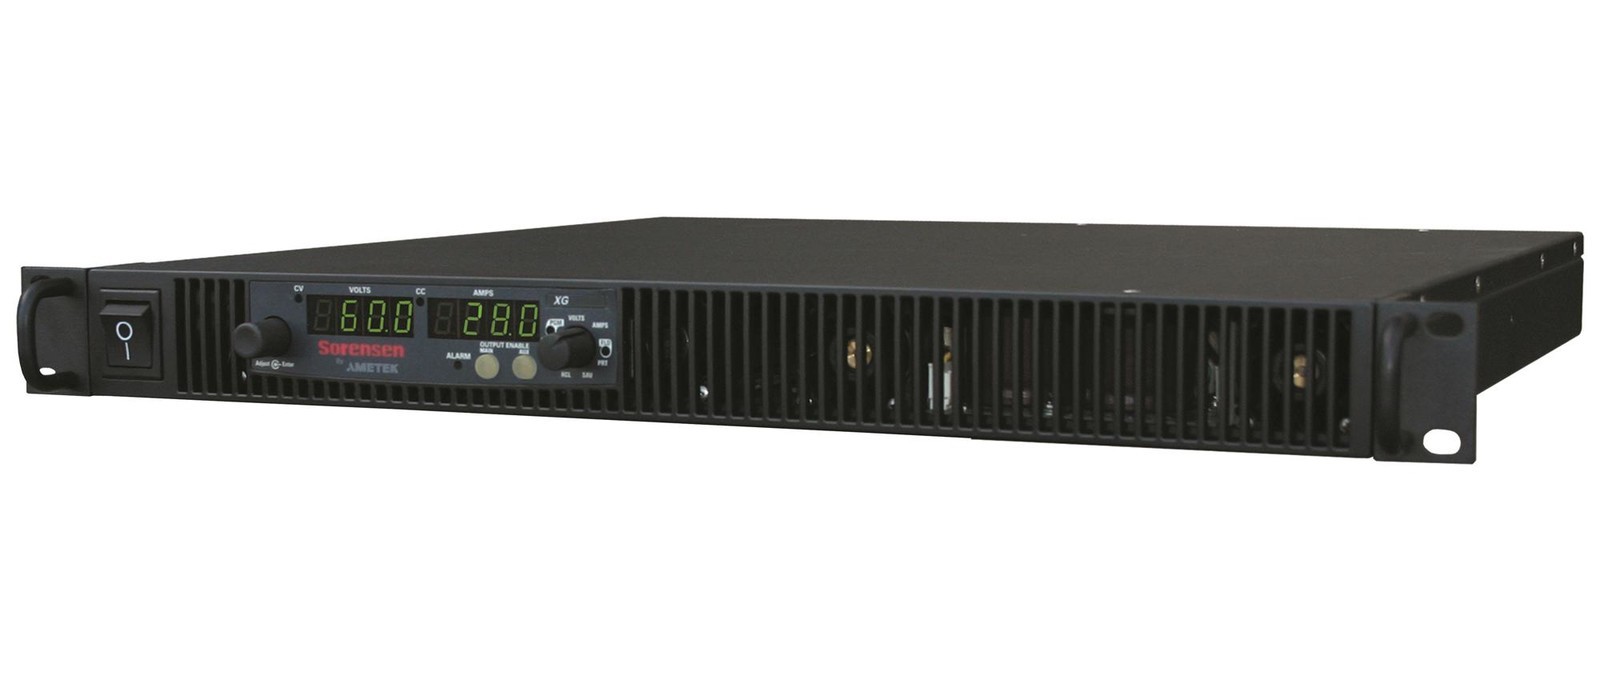 Ametek Programmable Power Xg 300-2.8R Power Supply, Prog, 2.8A, 300V, 850W